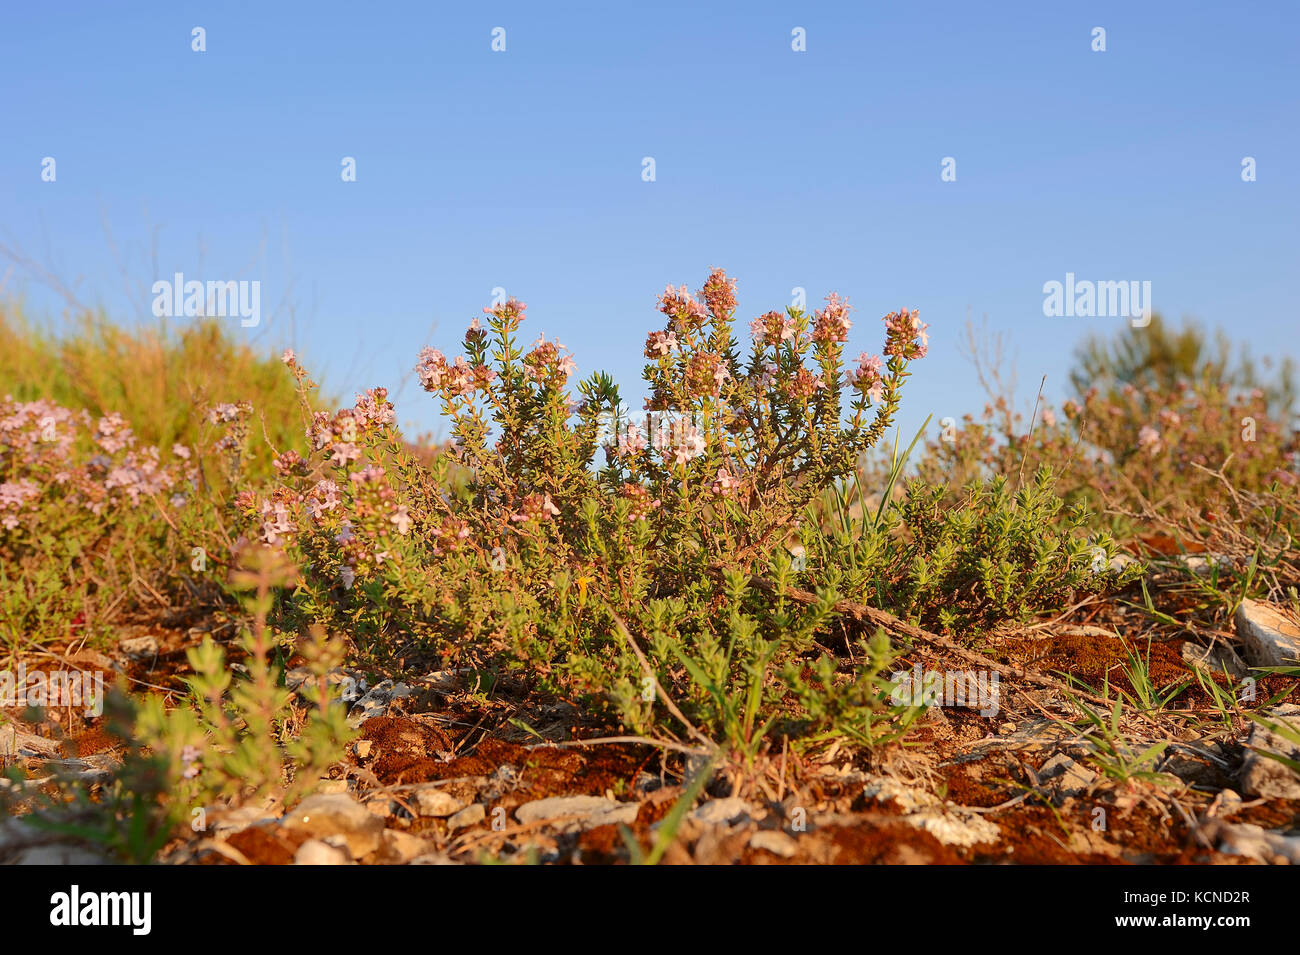 Timo comune, Provenza, Francia meridionale / (Thymus vulgaris) | Echter su Thymian, Provenza, Suedfrankreich / (Thymus vulgaris) Foto Stock